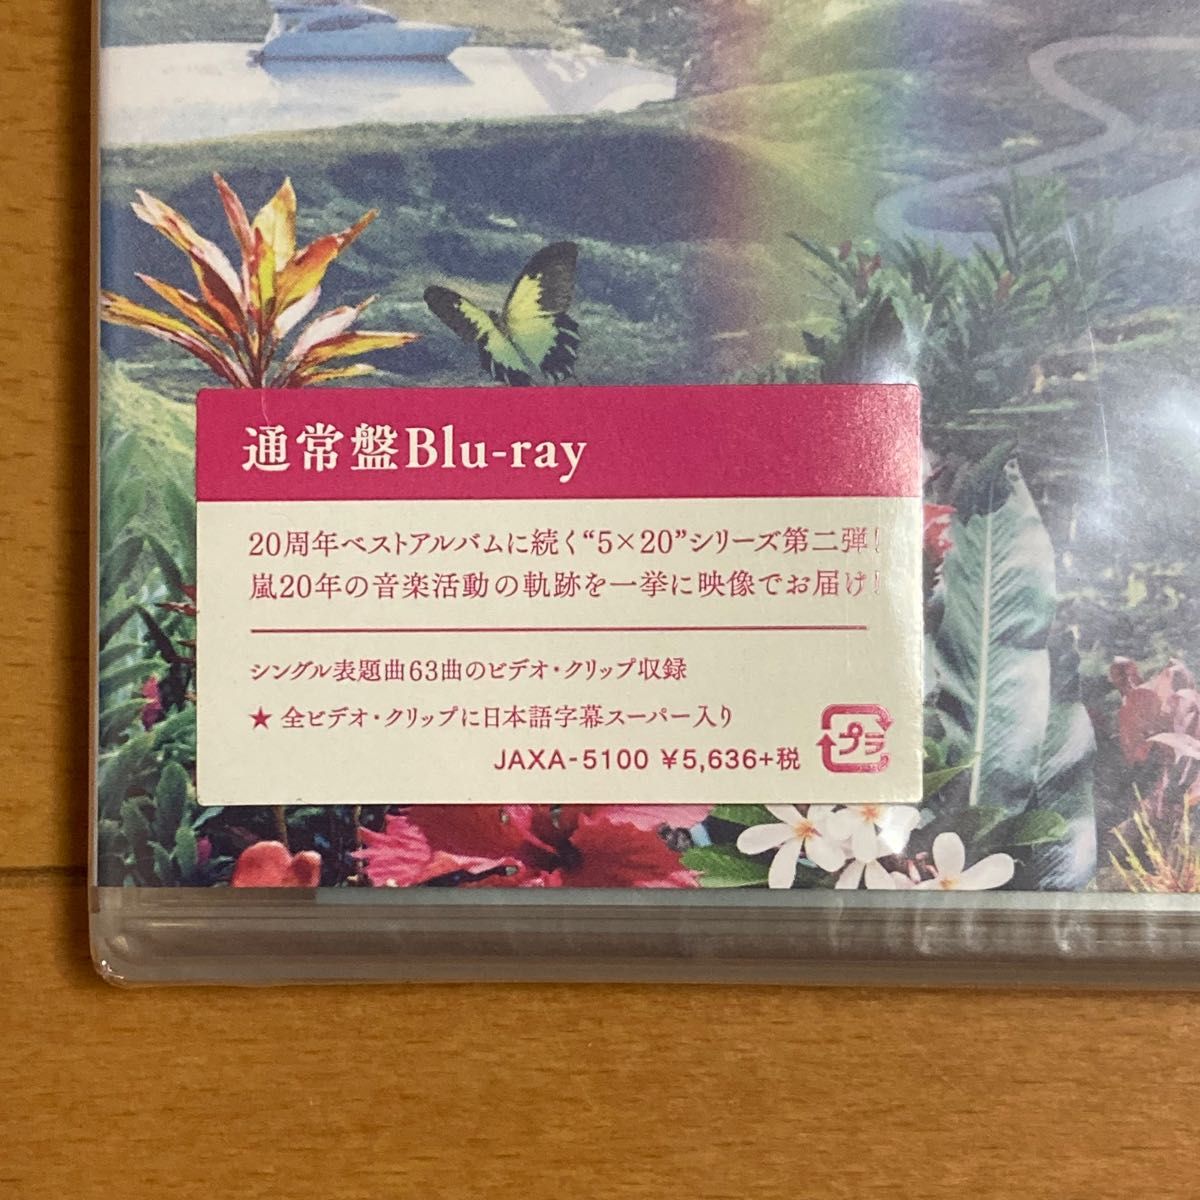 【未開封2作品セット】Blu-ray,  2CD+Blu-ray